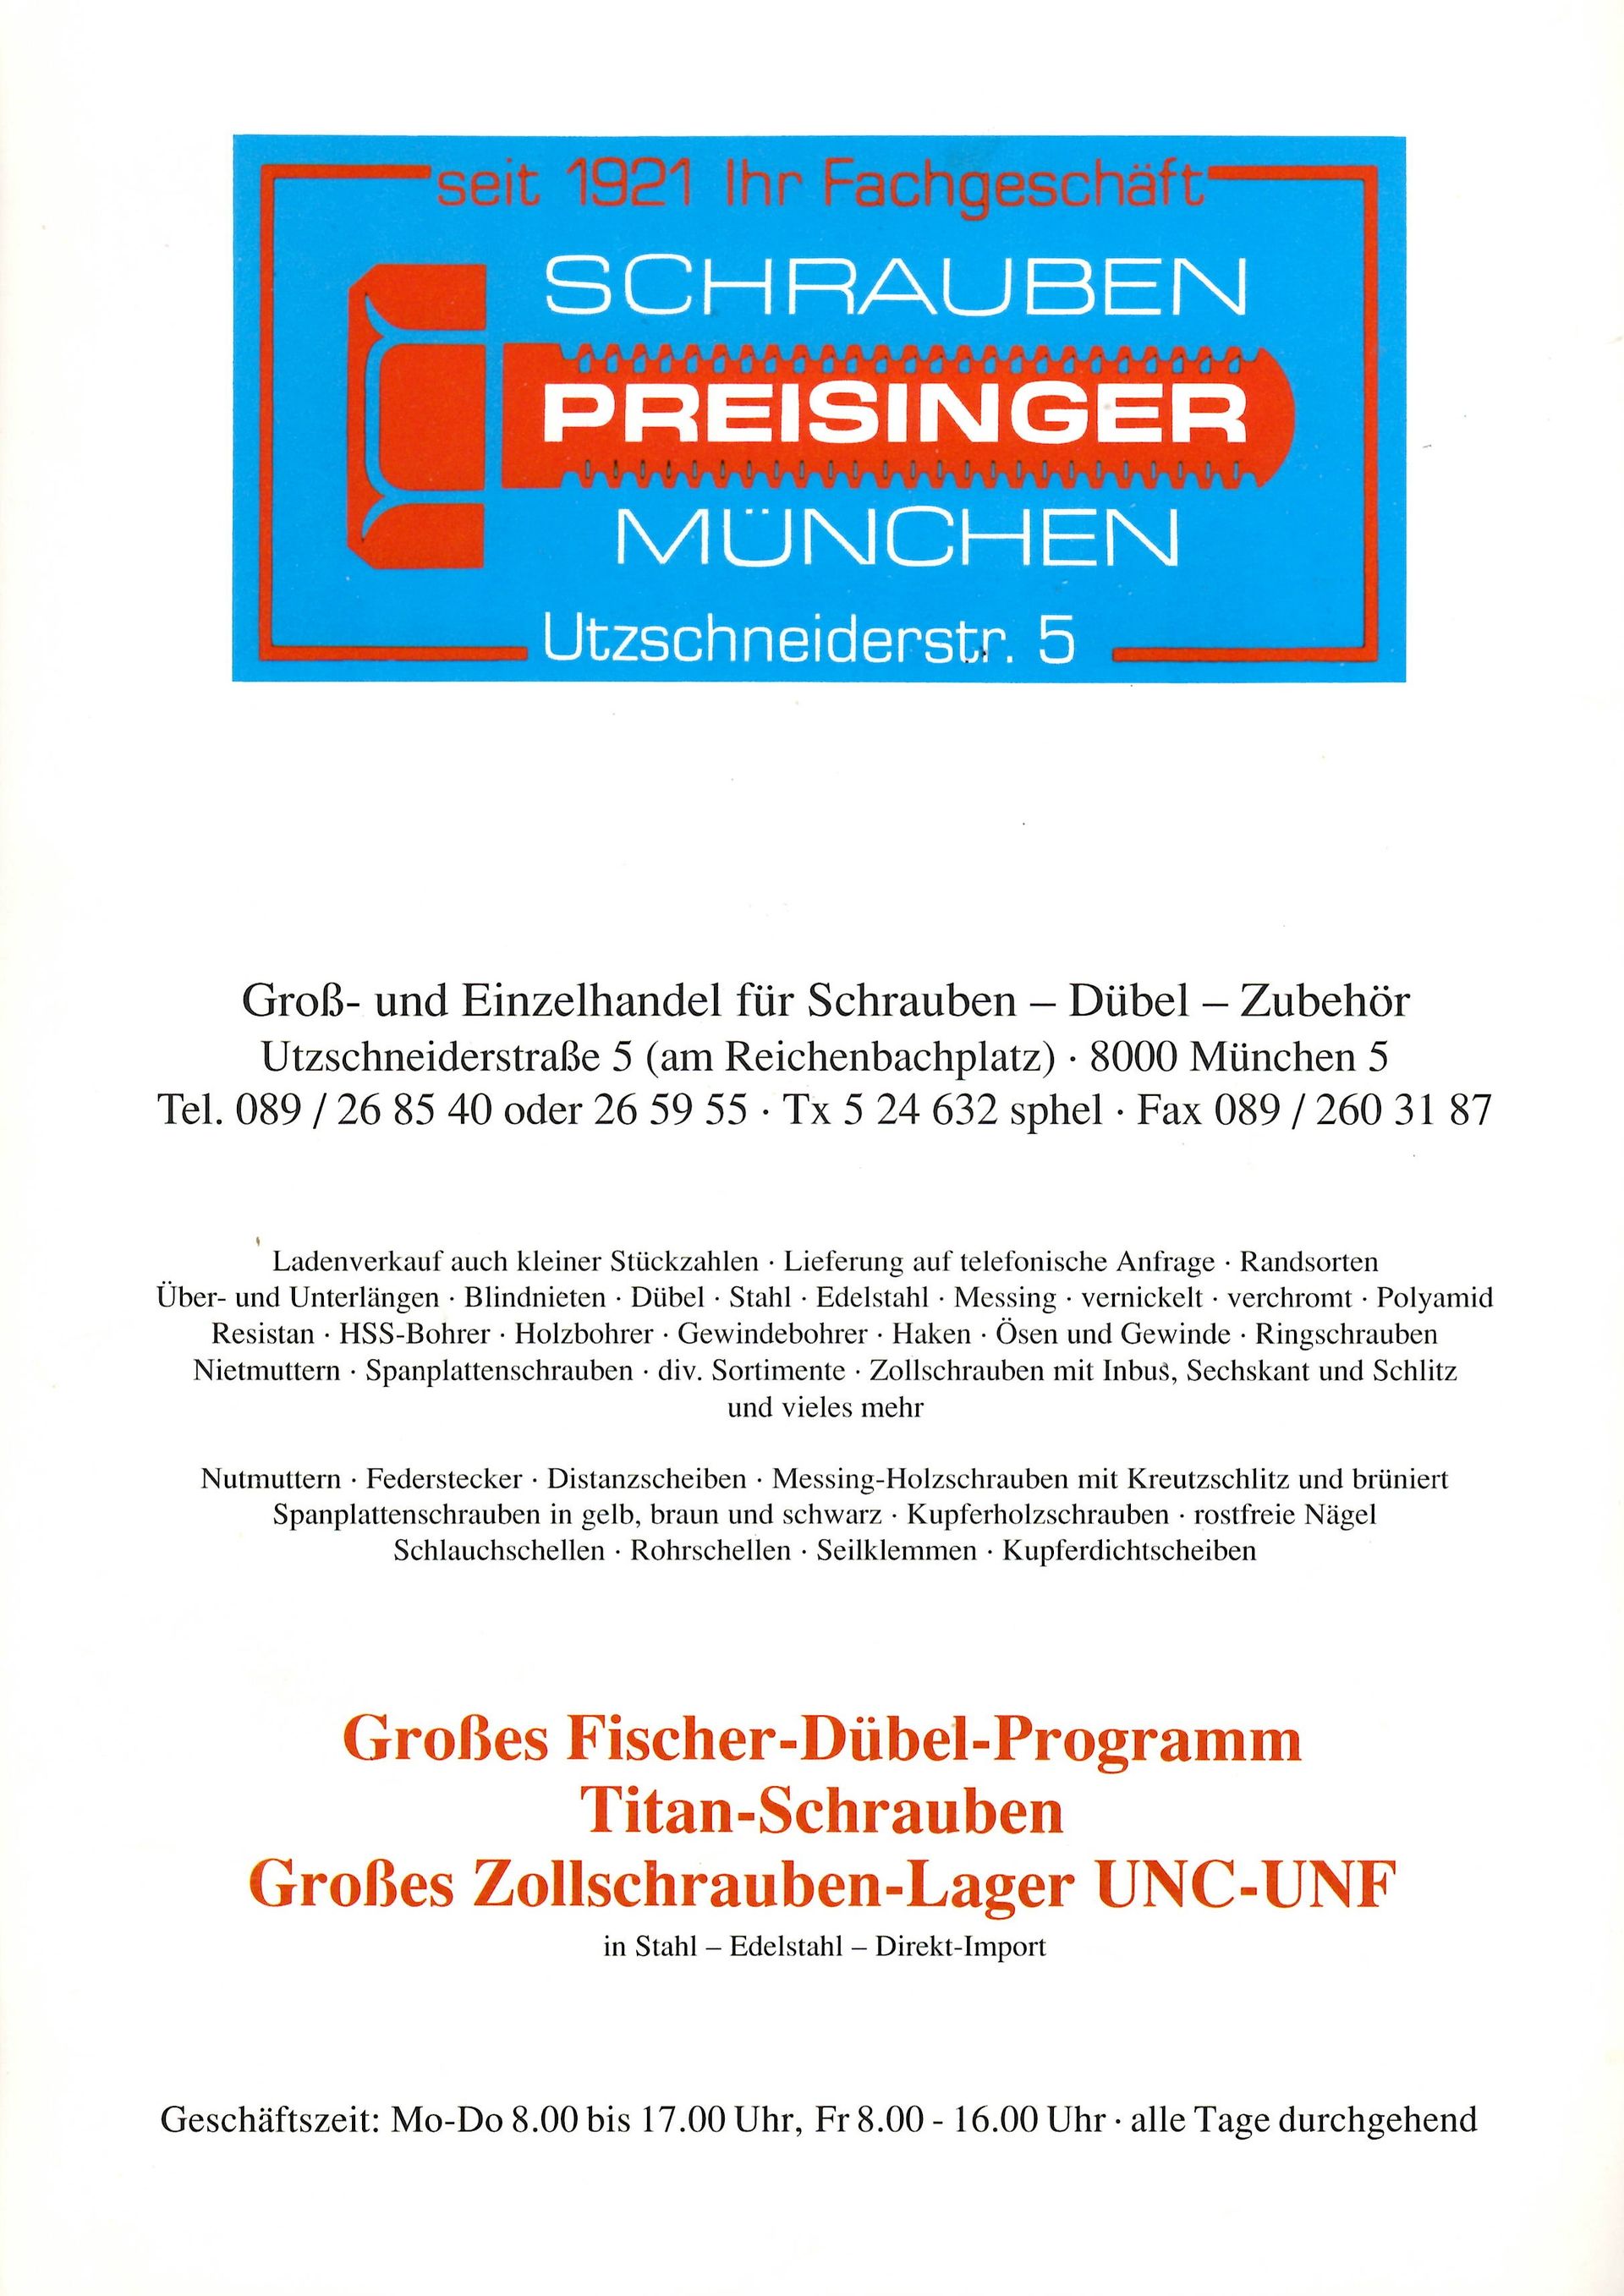 Chronik Schrauben-Preisinger